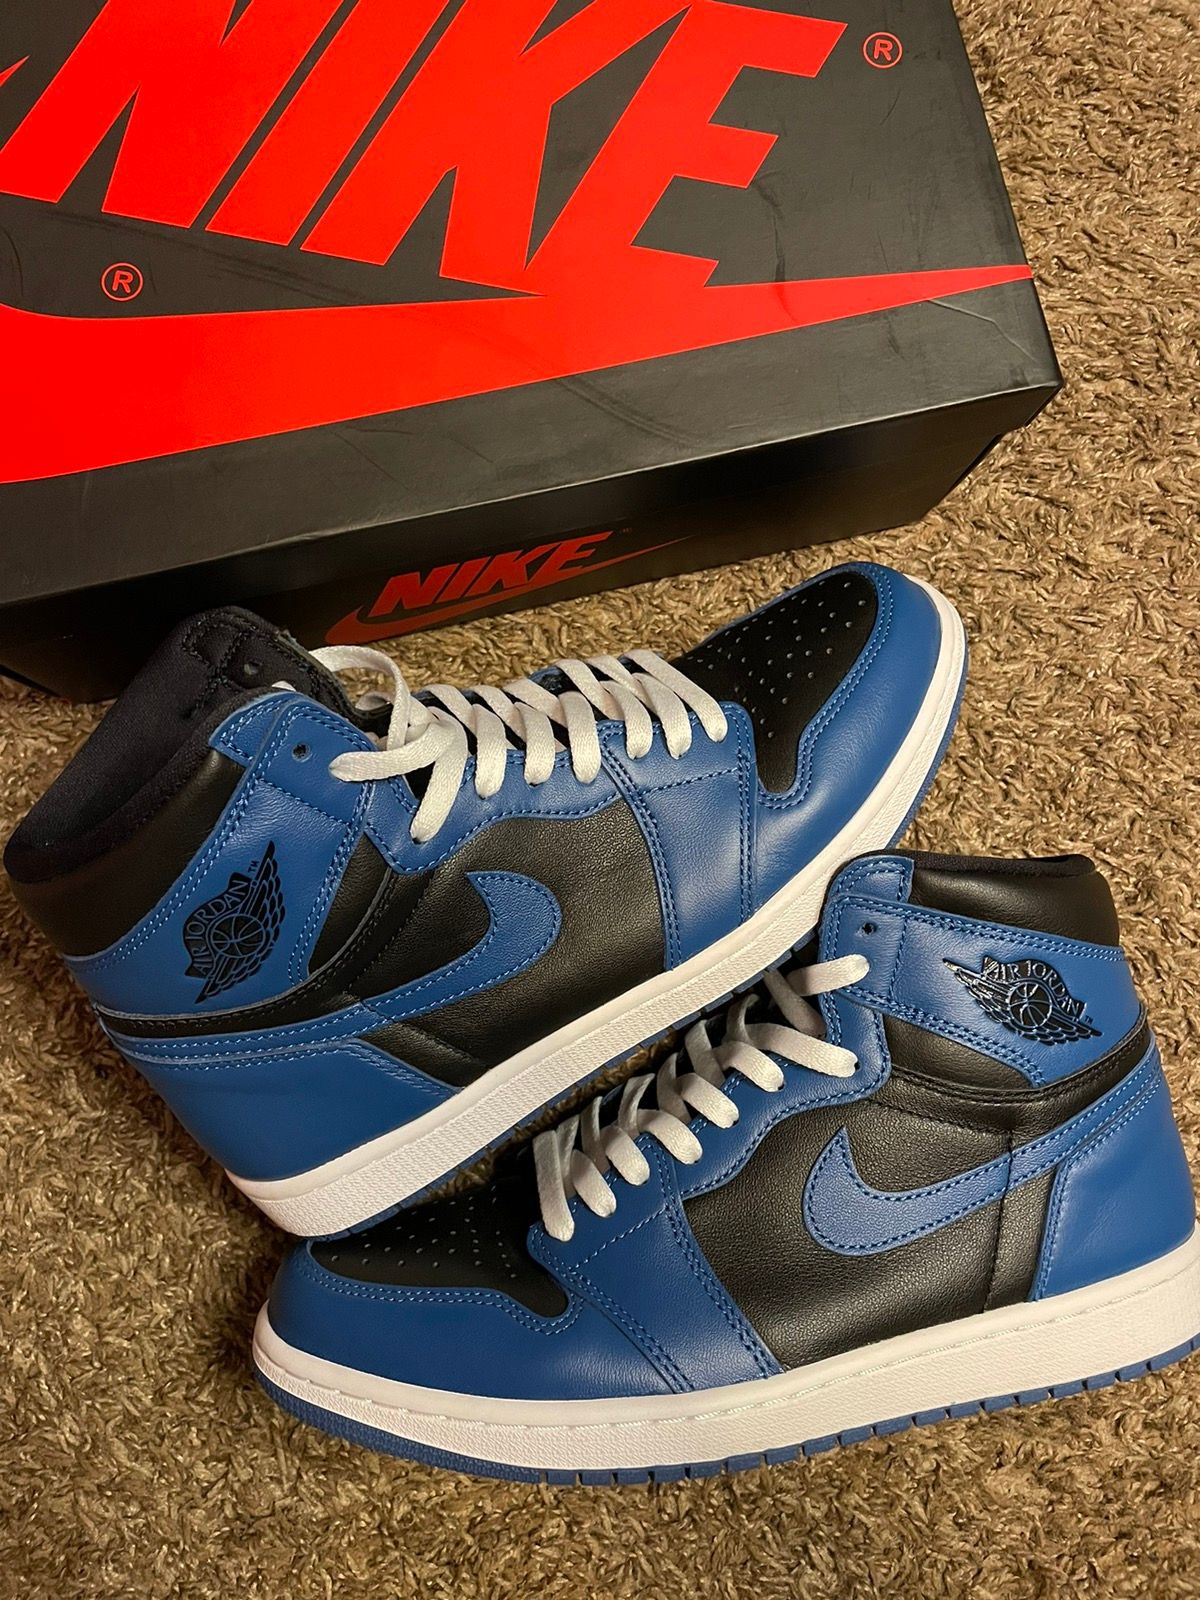 Pre-owned Jordan Brand 1 Retro High Dark Marina Blue Size 9.5 Shoes